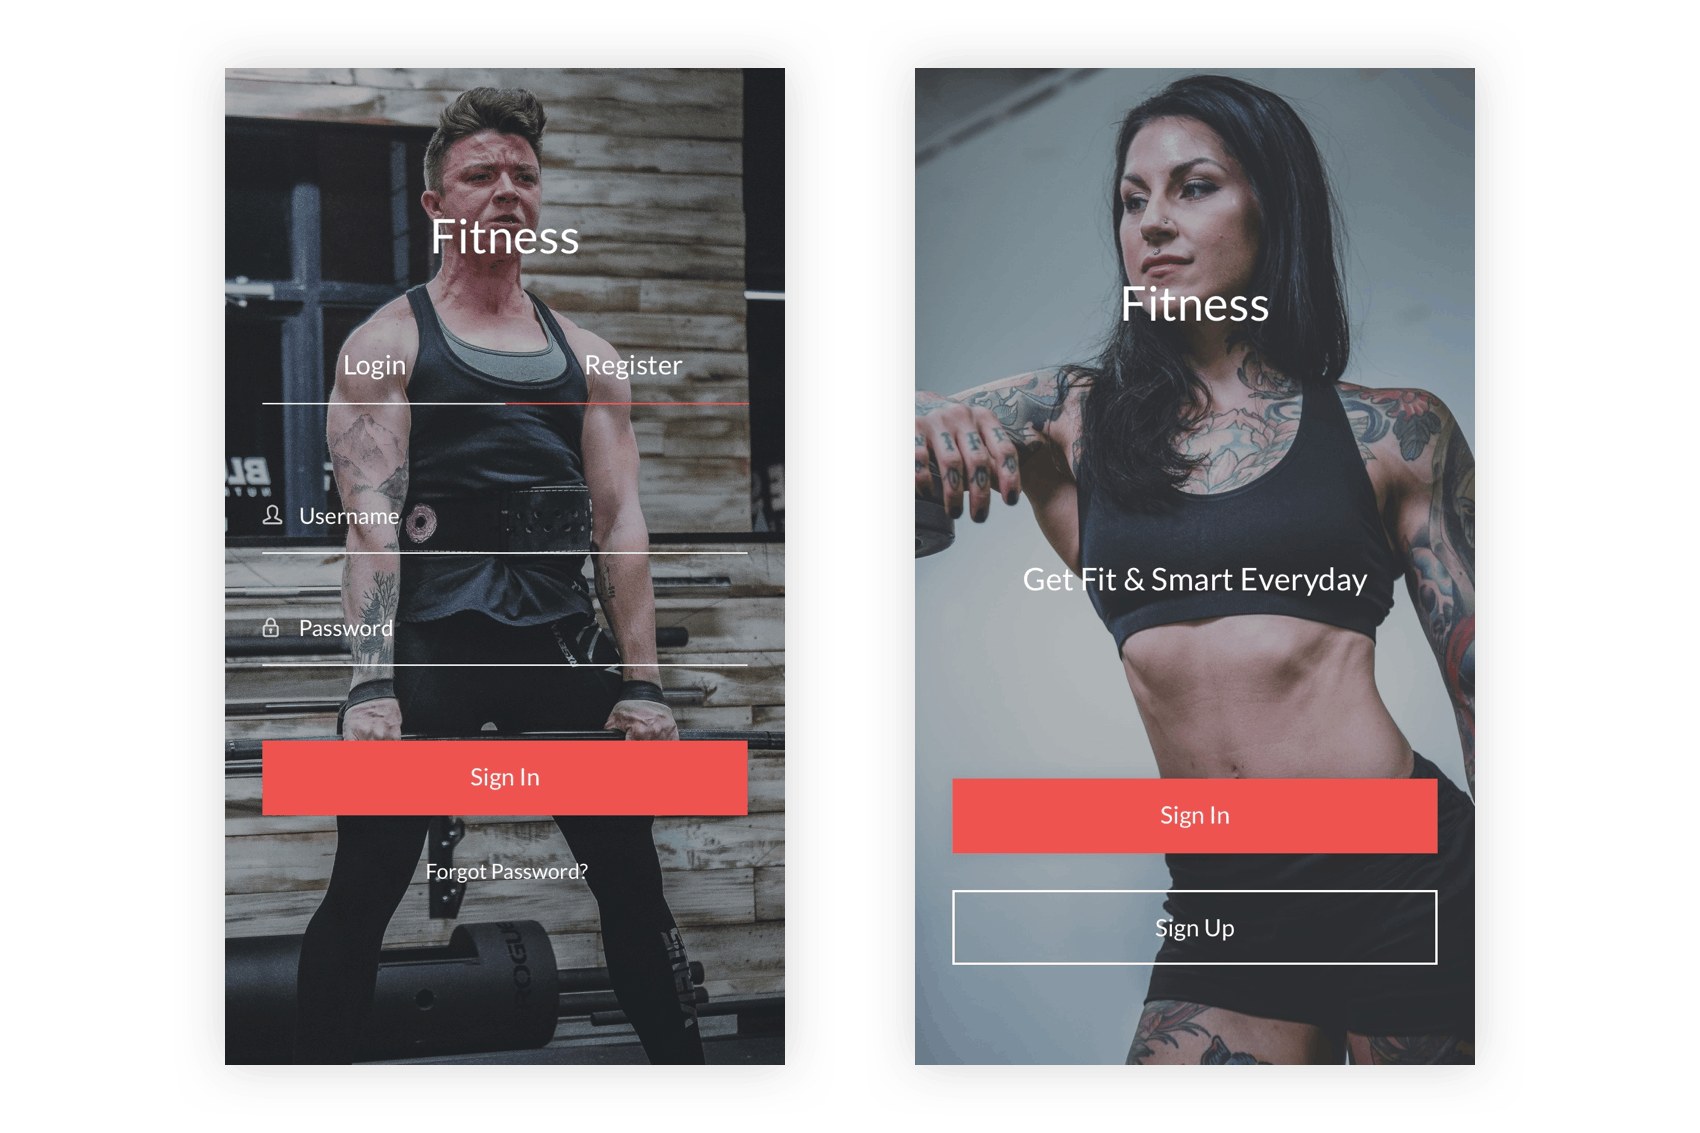 健身俱乐部/健身运动APP应用UI设计套件XD模板 Fitness – Health, Workout & Gym UI Kit in Adobe XD插图(1)